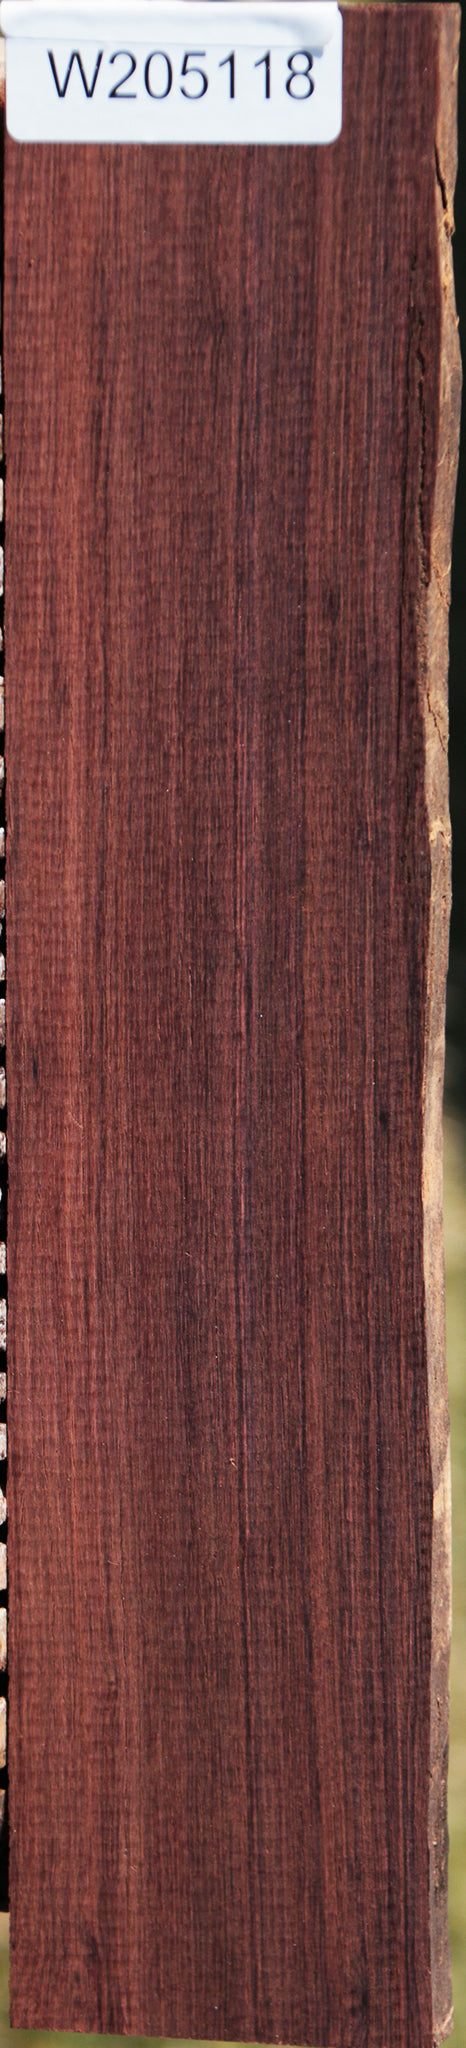 Madagascar Rosewood Live Edge Lumber